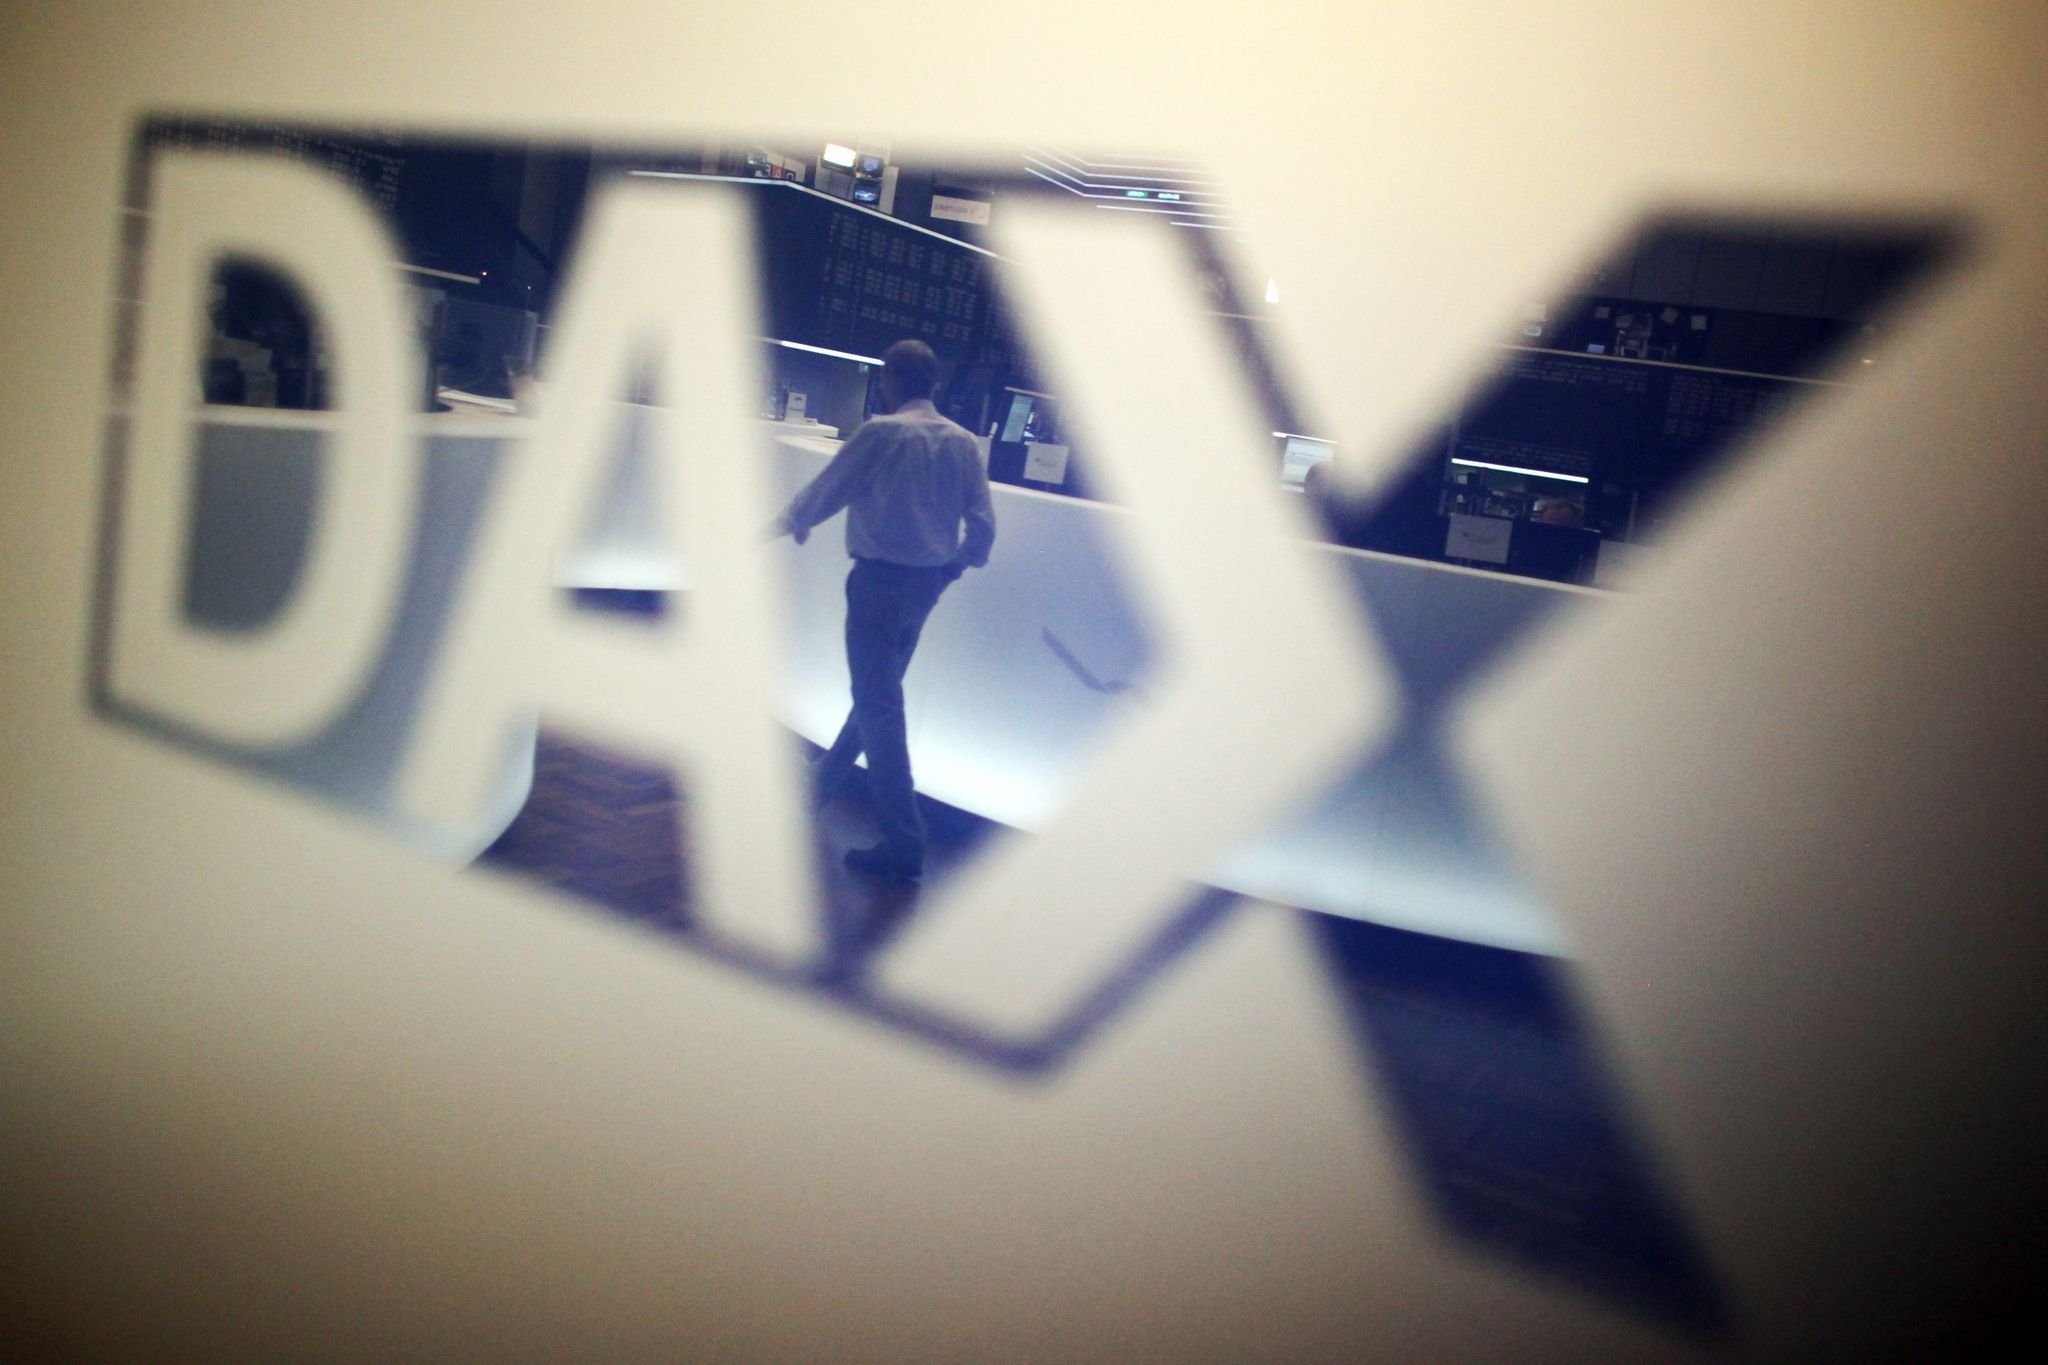 Börse in Frankfurt: Dax kaum verändert - Uniper-Aktien verlieren stark